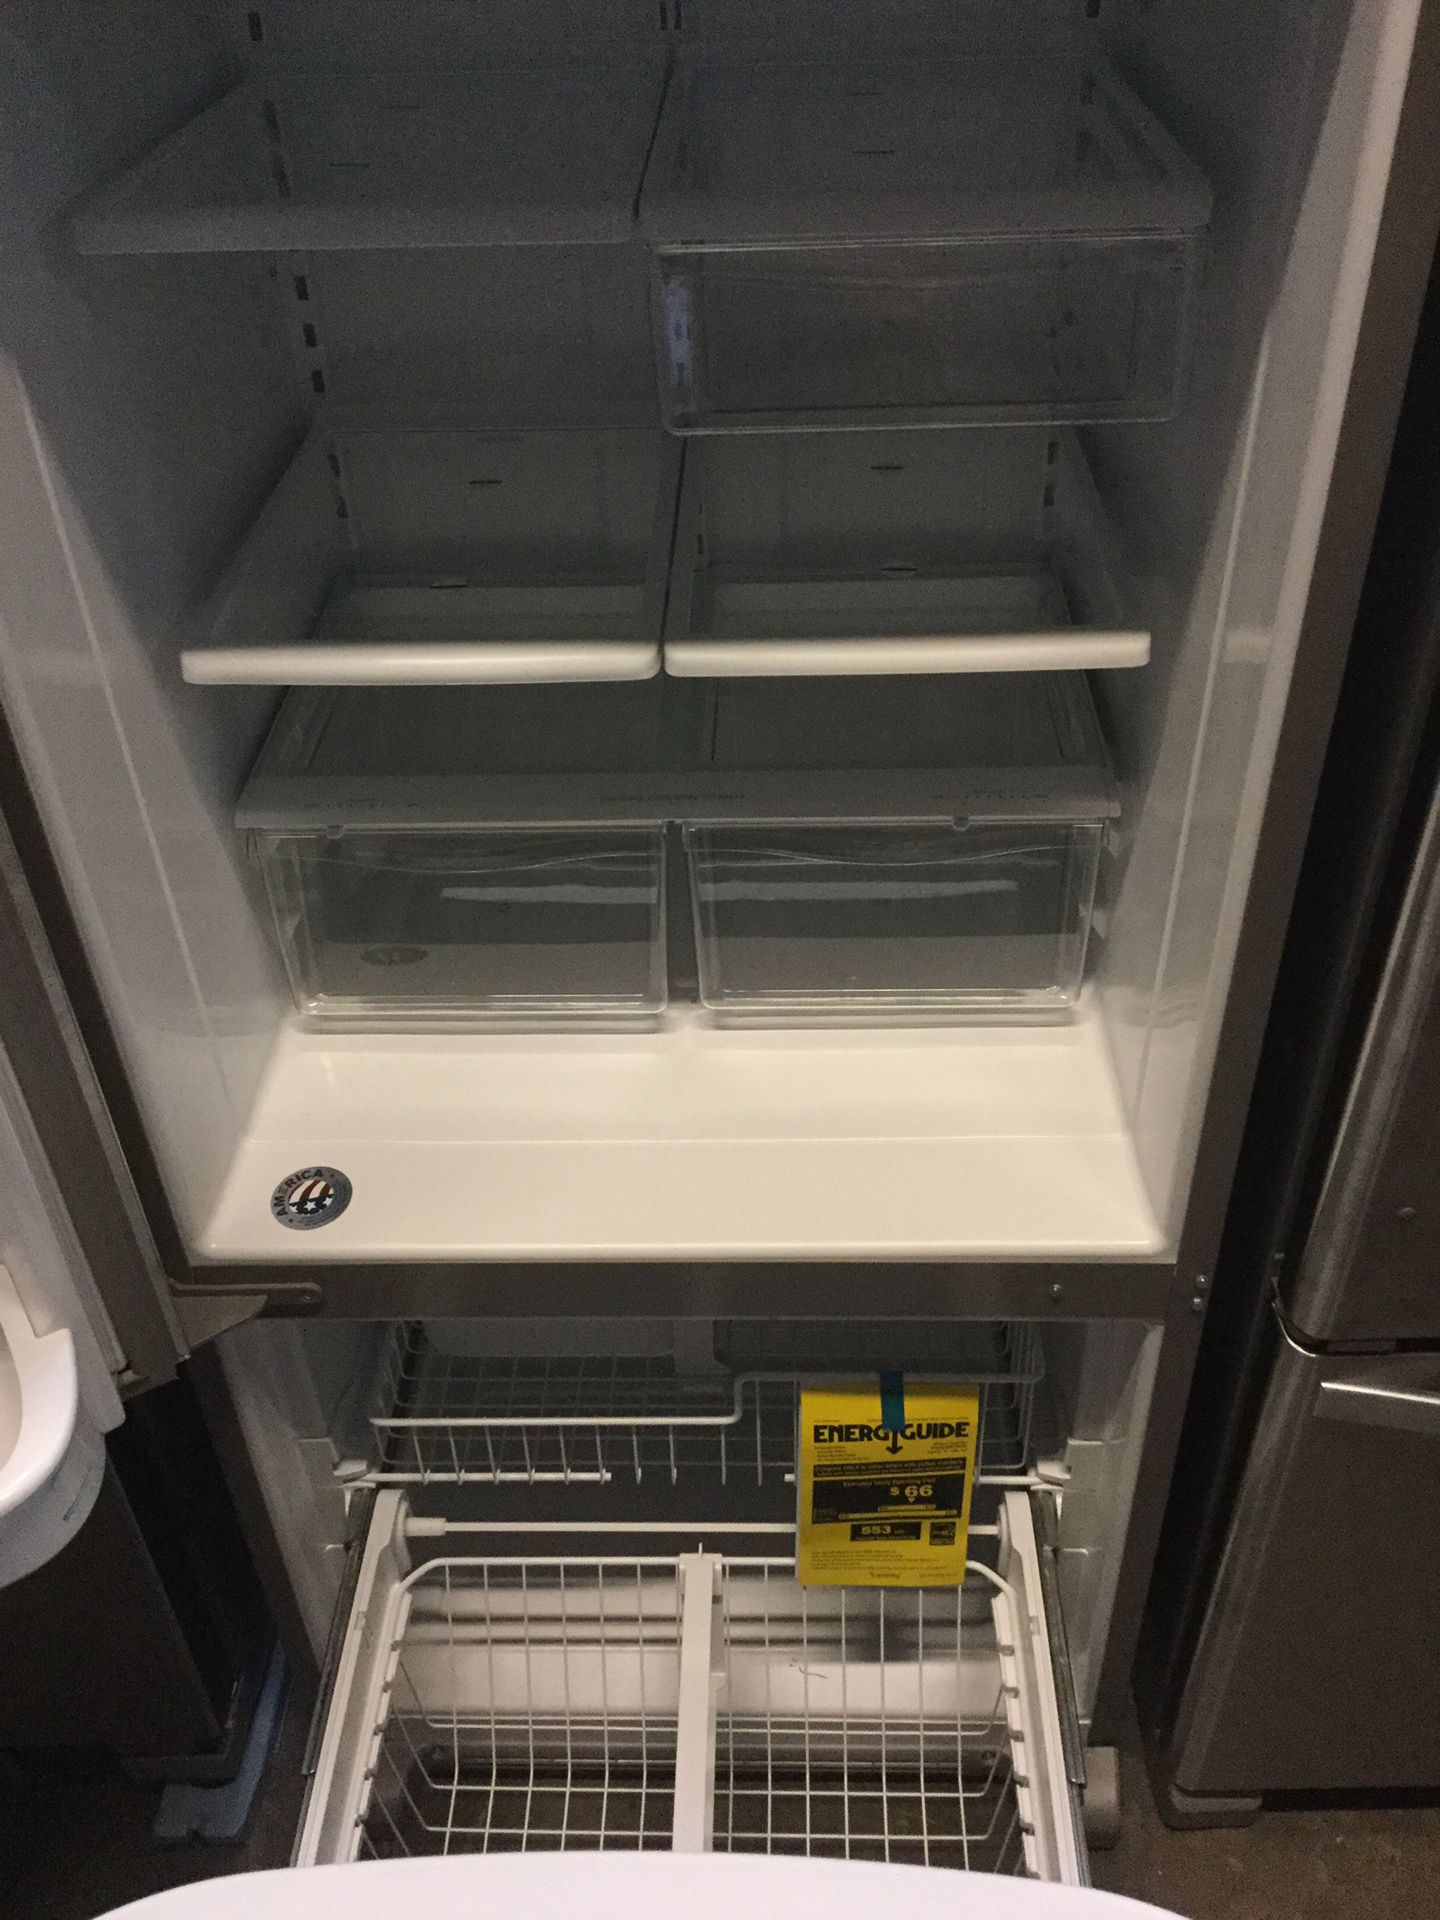 Whirlpool 18.7 cu. ft. Bottom Freezer Refrigerator in Monochromatic Stainless Steel